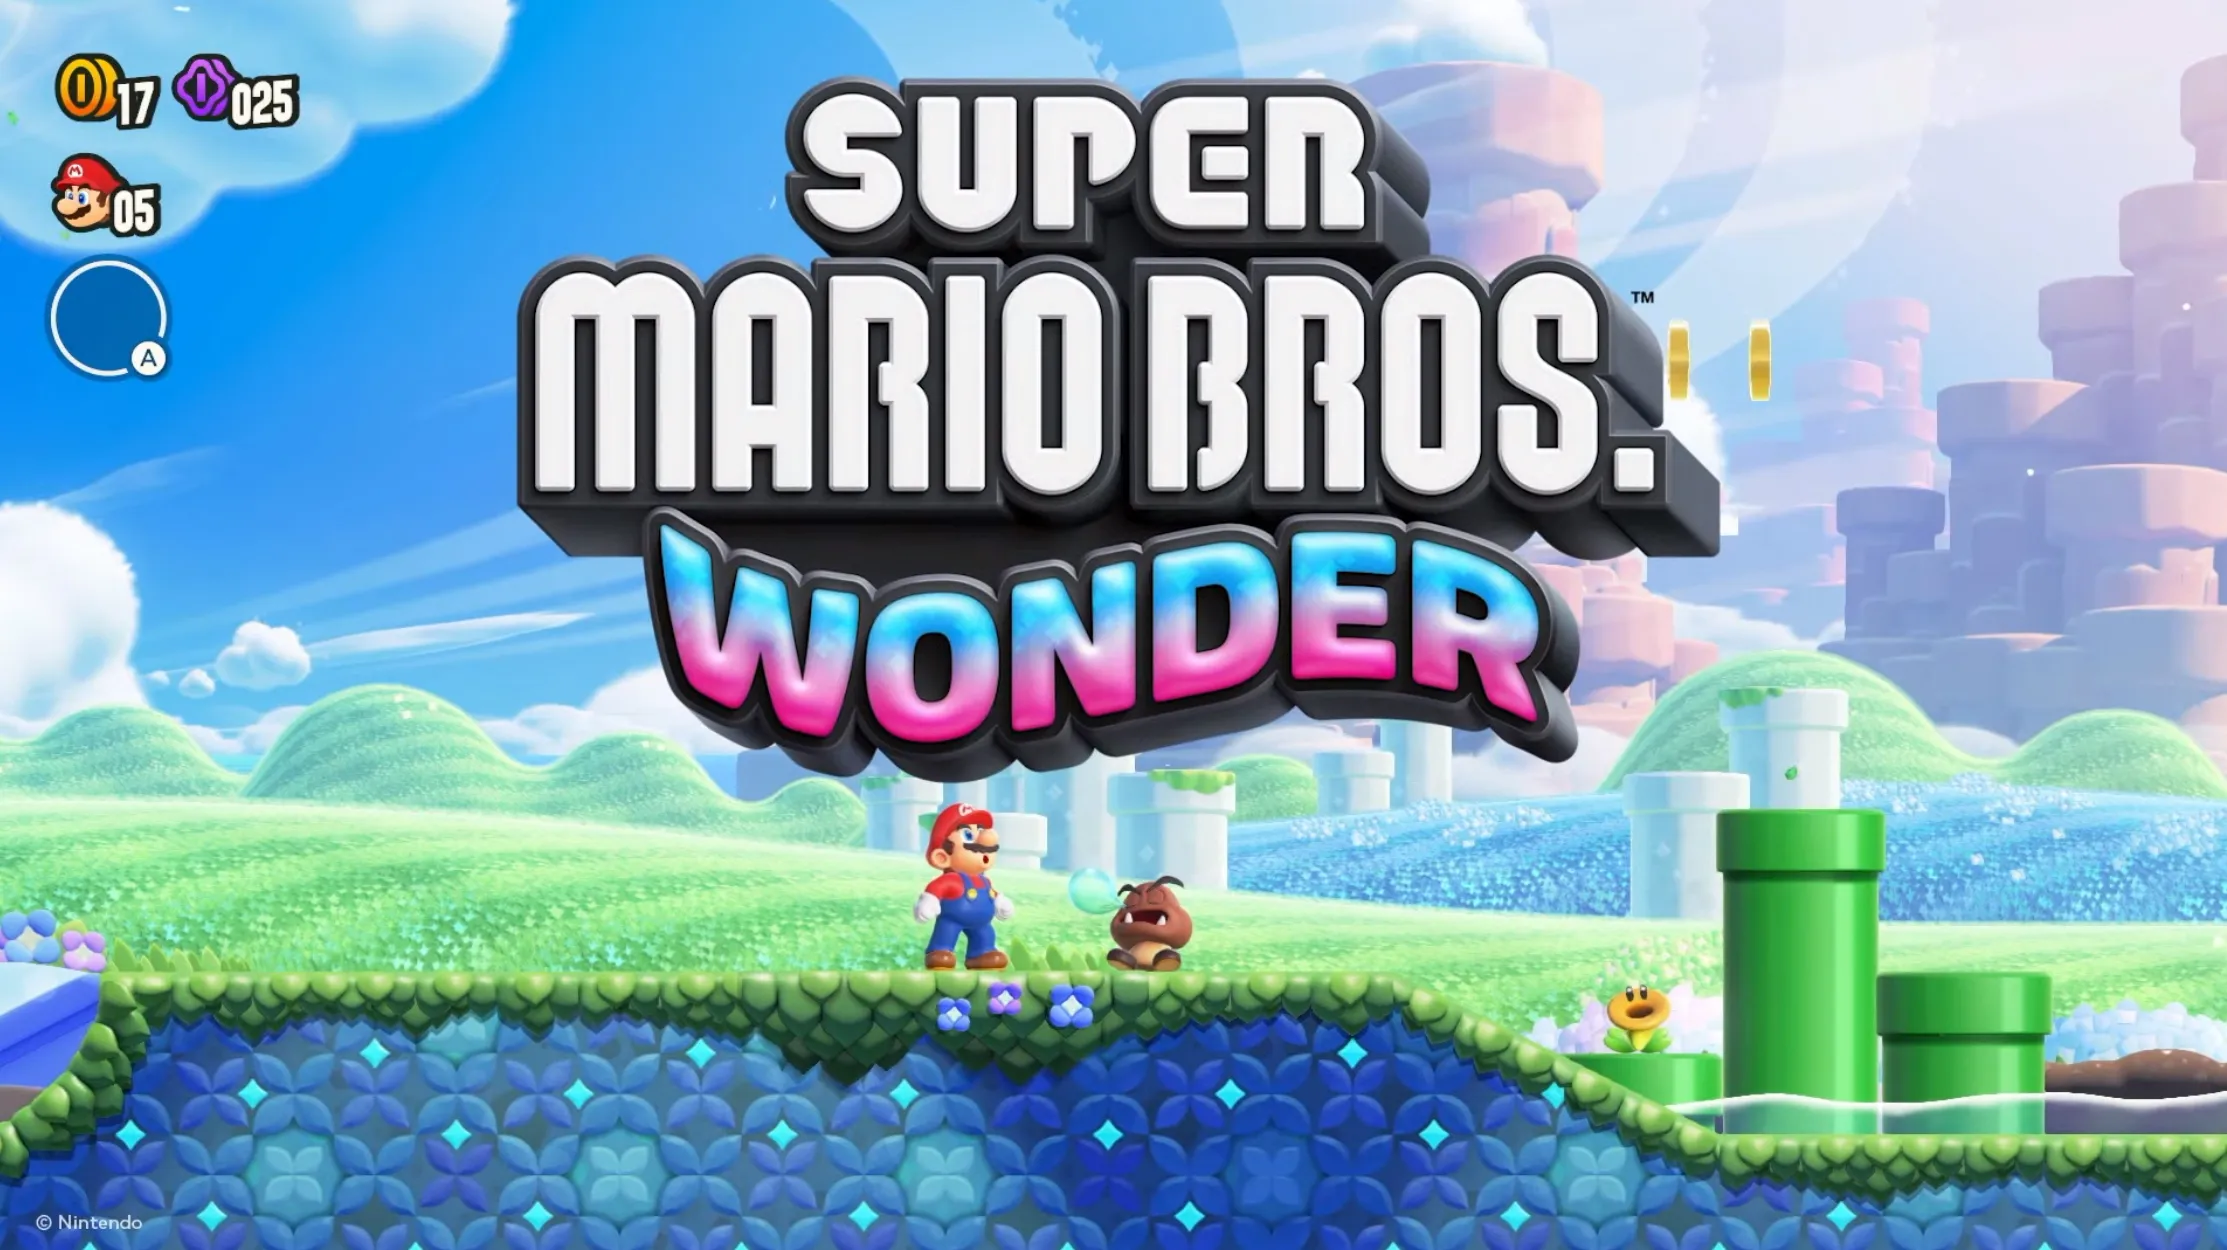 Nintendo Switch with Super Mario Bros. Wonder Bundle 